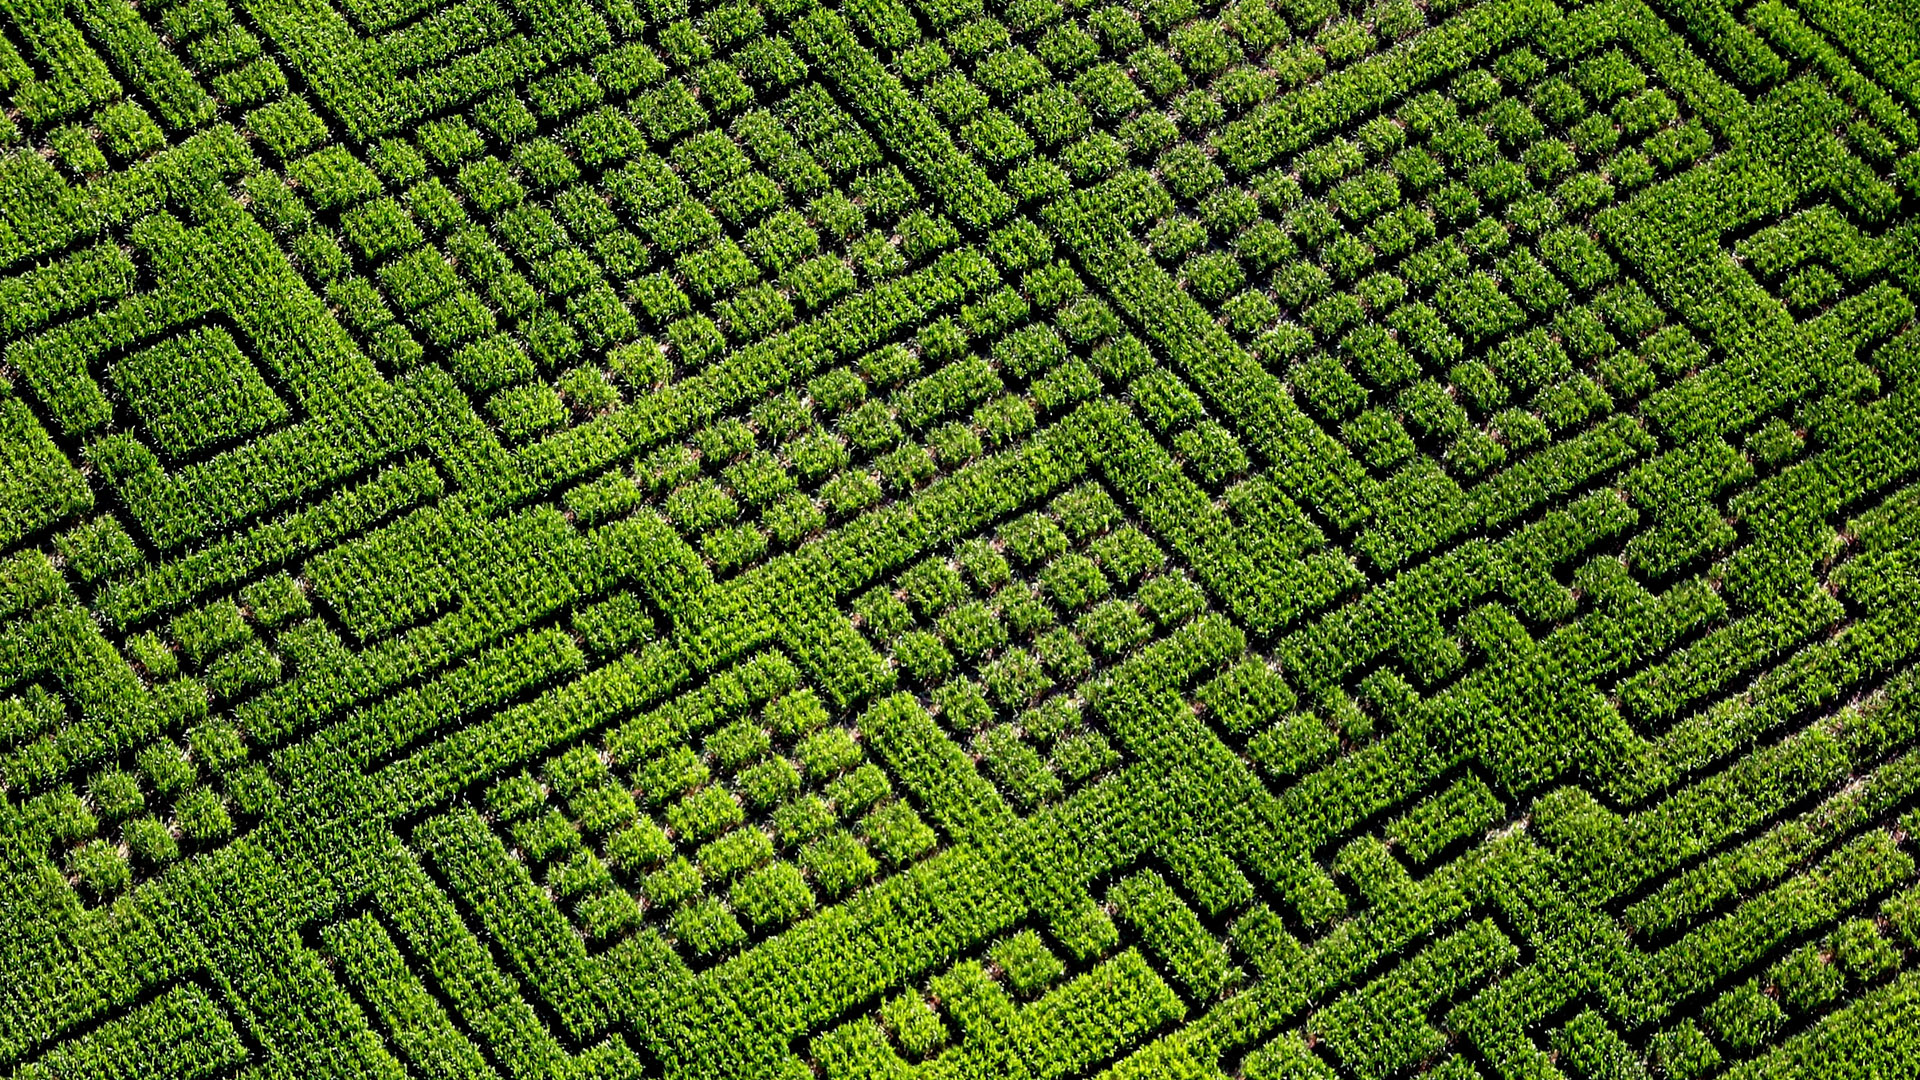 Maislabyrinth aus der Luft